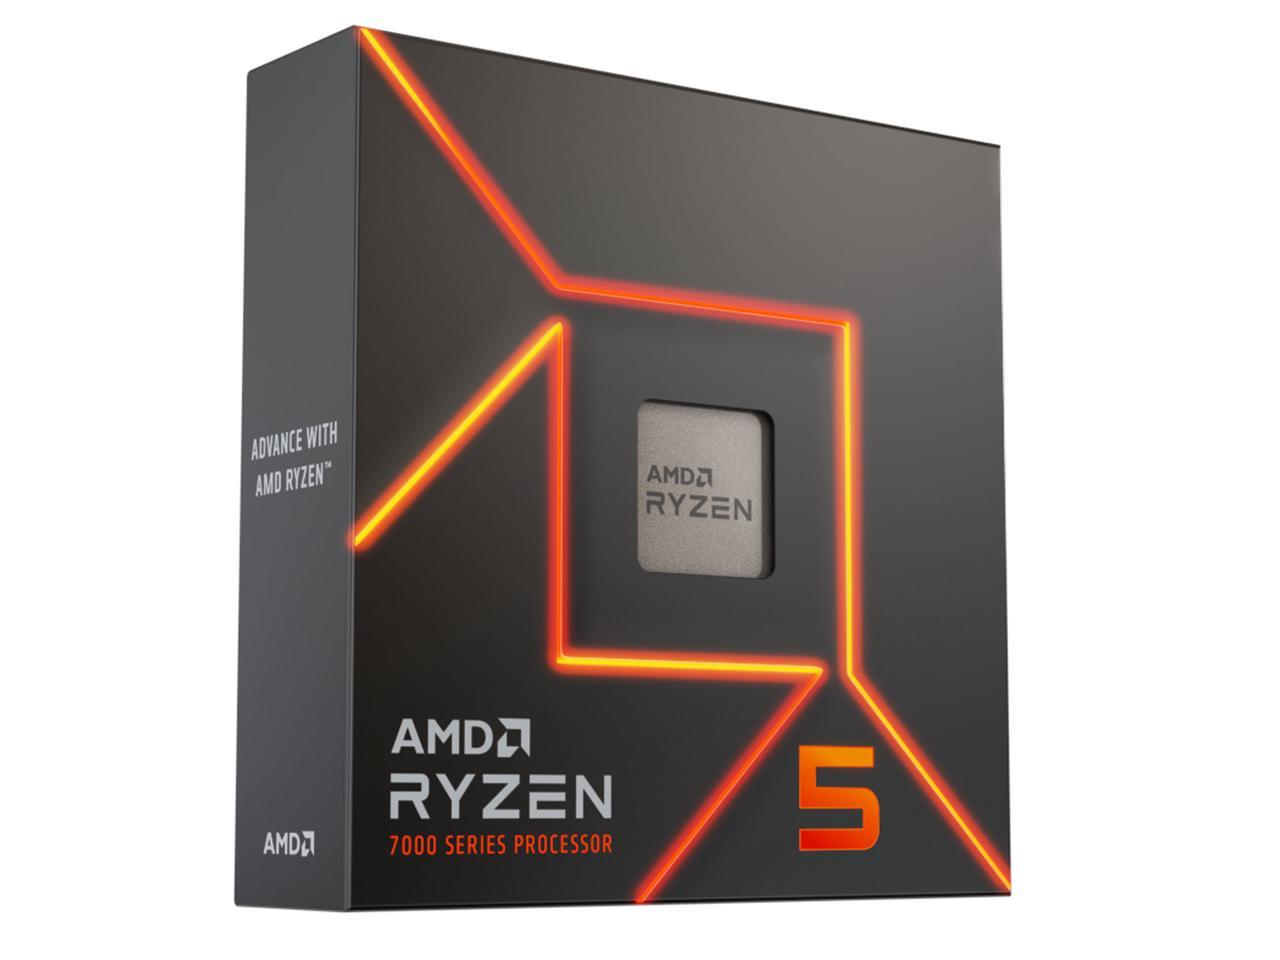 AMD Ryzen 5 7600X 4.7GHz 6-Core Unlocked Desktop Processor $239 at Newegg